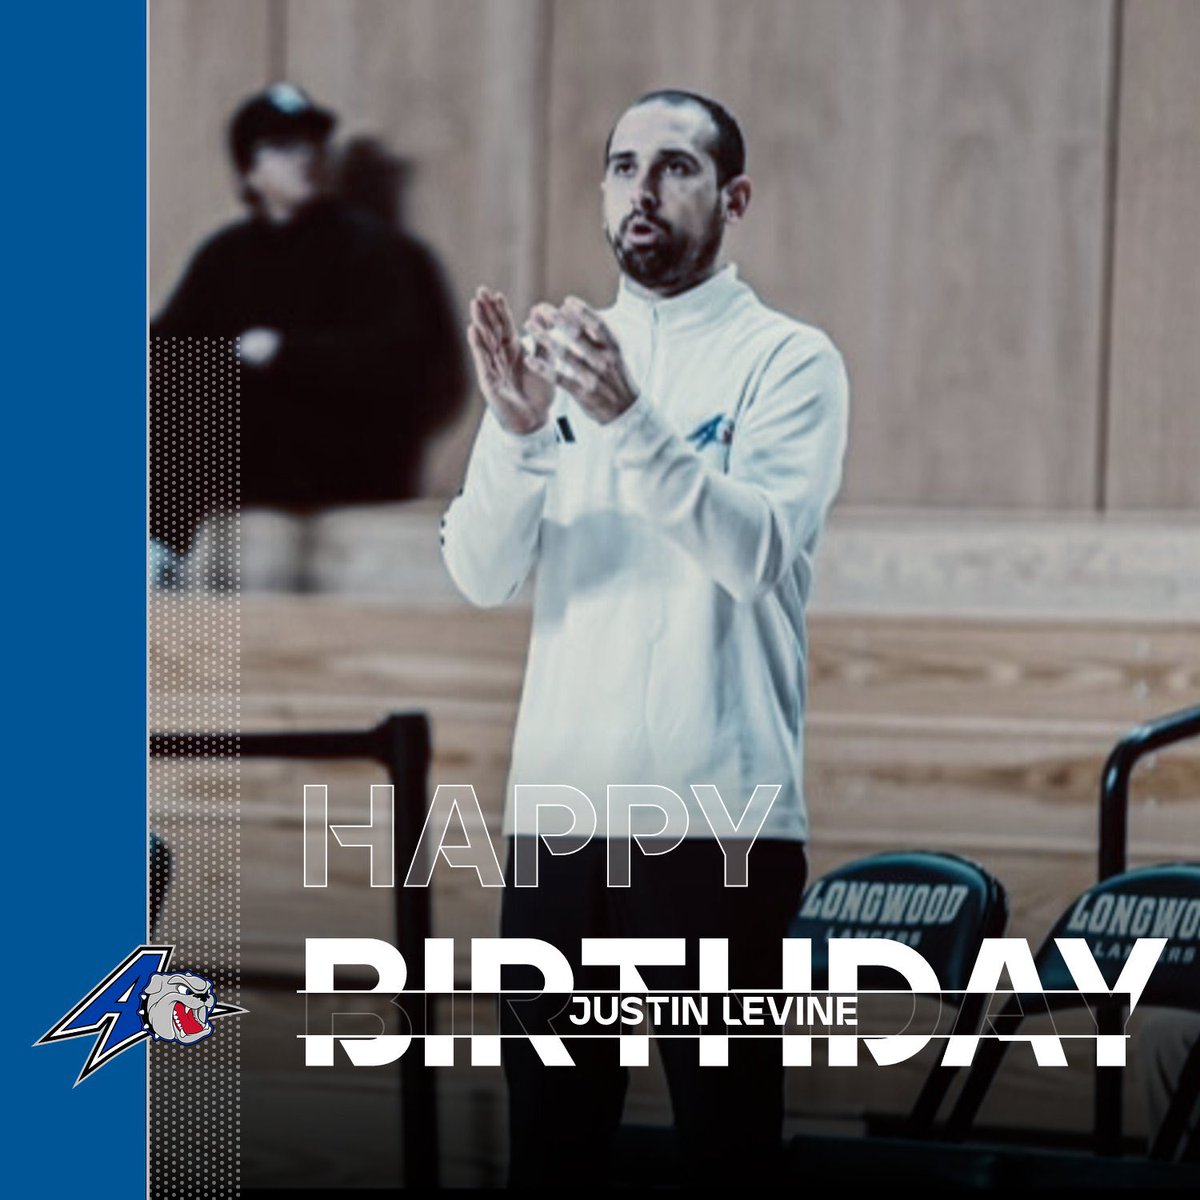 𝔹𝕦𝕝𝕝𝕕𝕠𝕘 𝔹𝕚𝕣𝕥𝕙𝕕𝕒𝕪 🎉🐶 Join us in wishing Coach Justin Levine a Happy Birthday! #ALLinAVL #IWWD